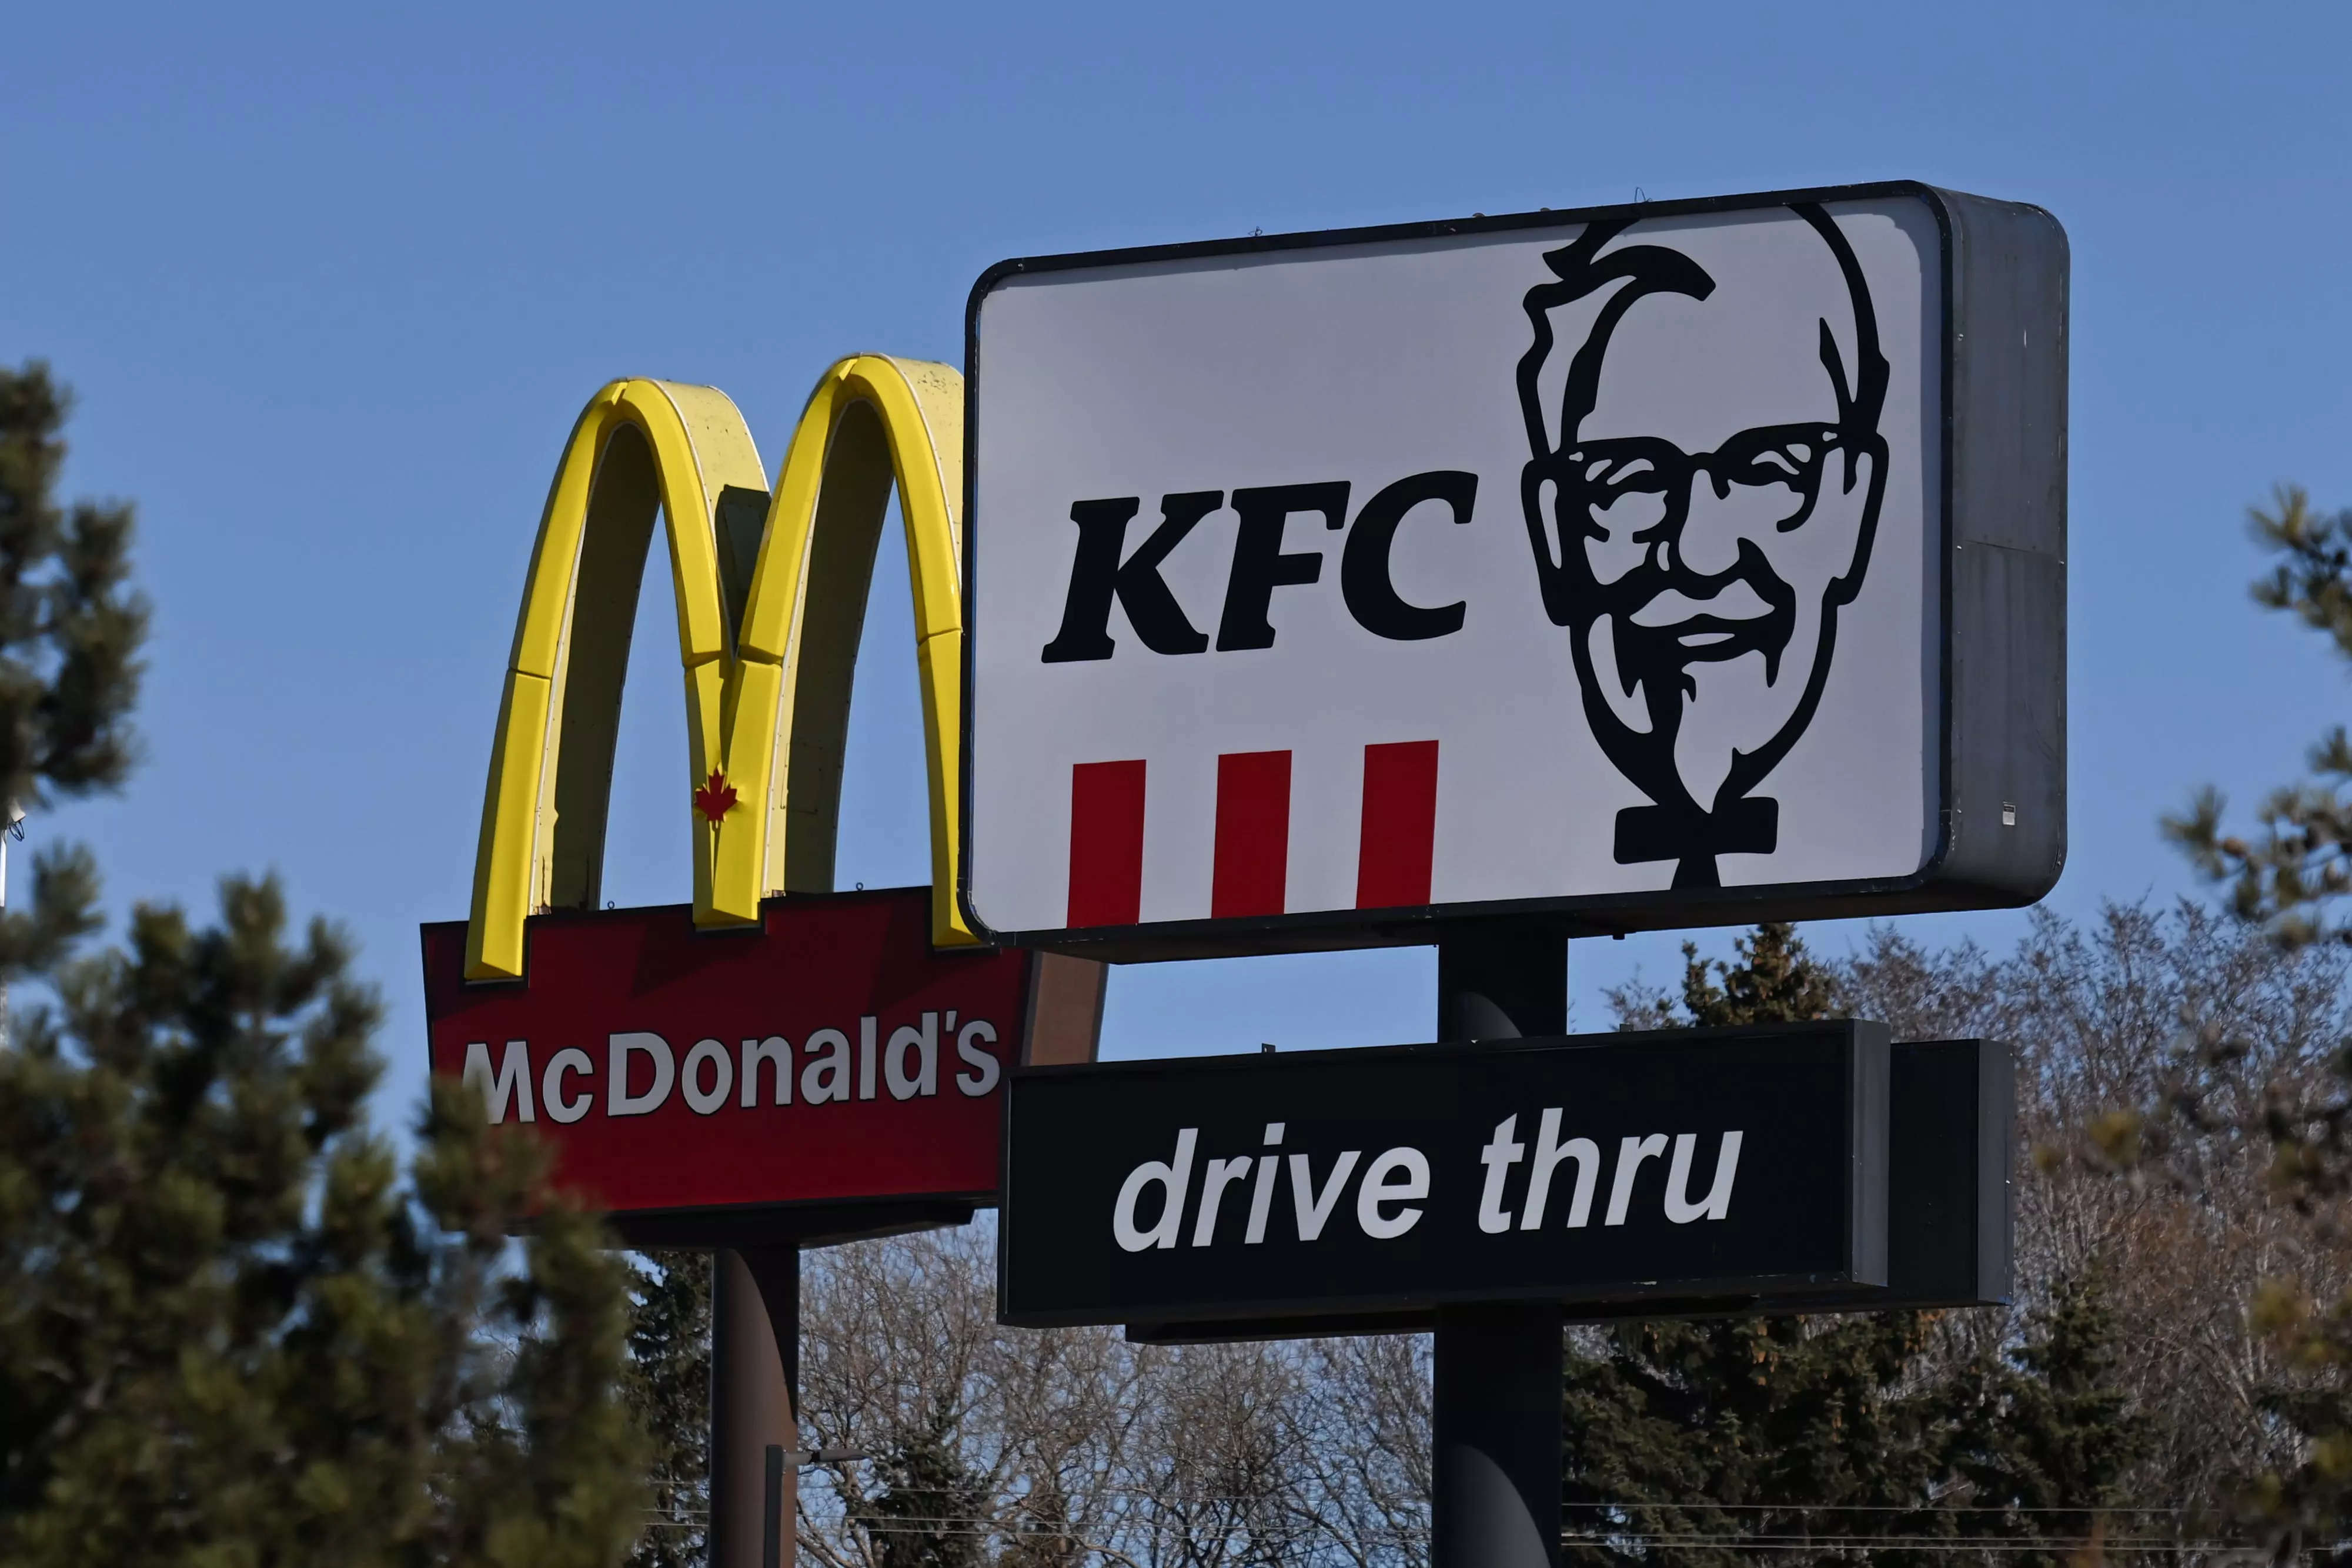 KFC and McDonald